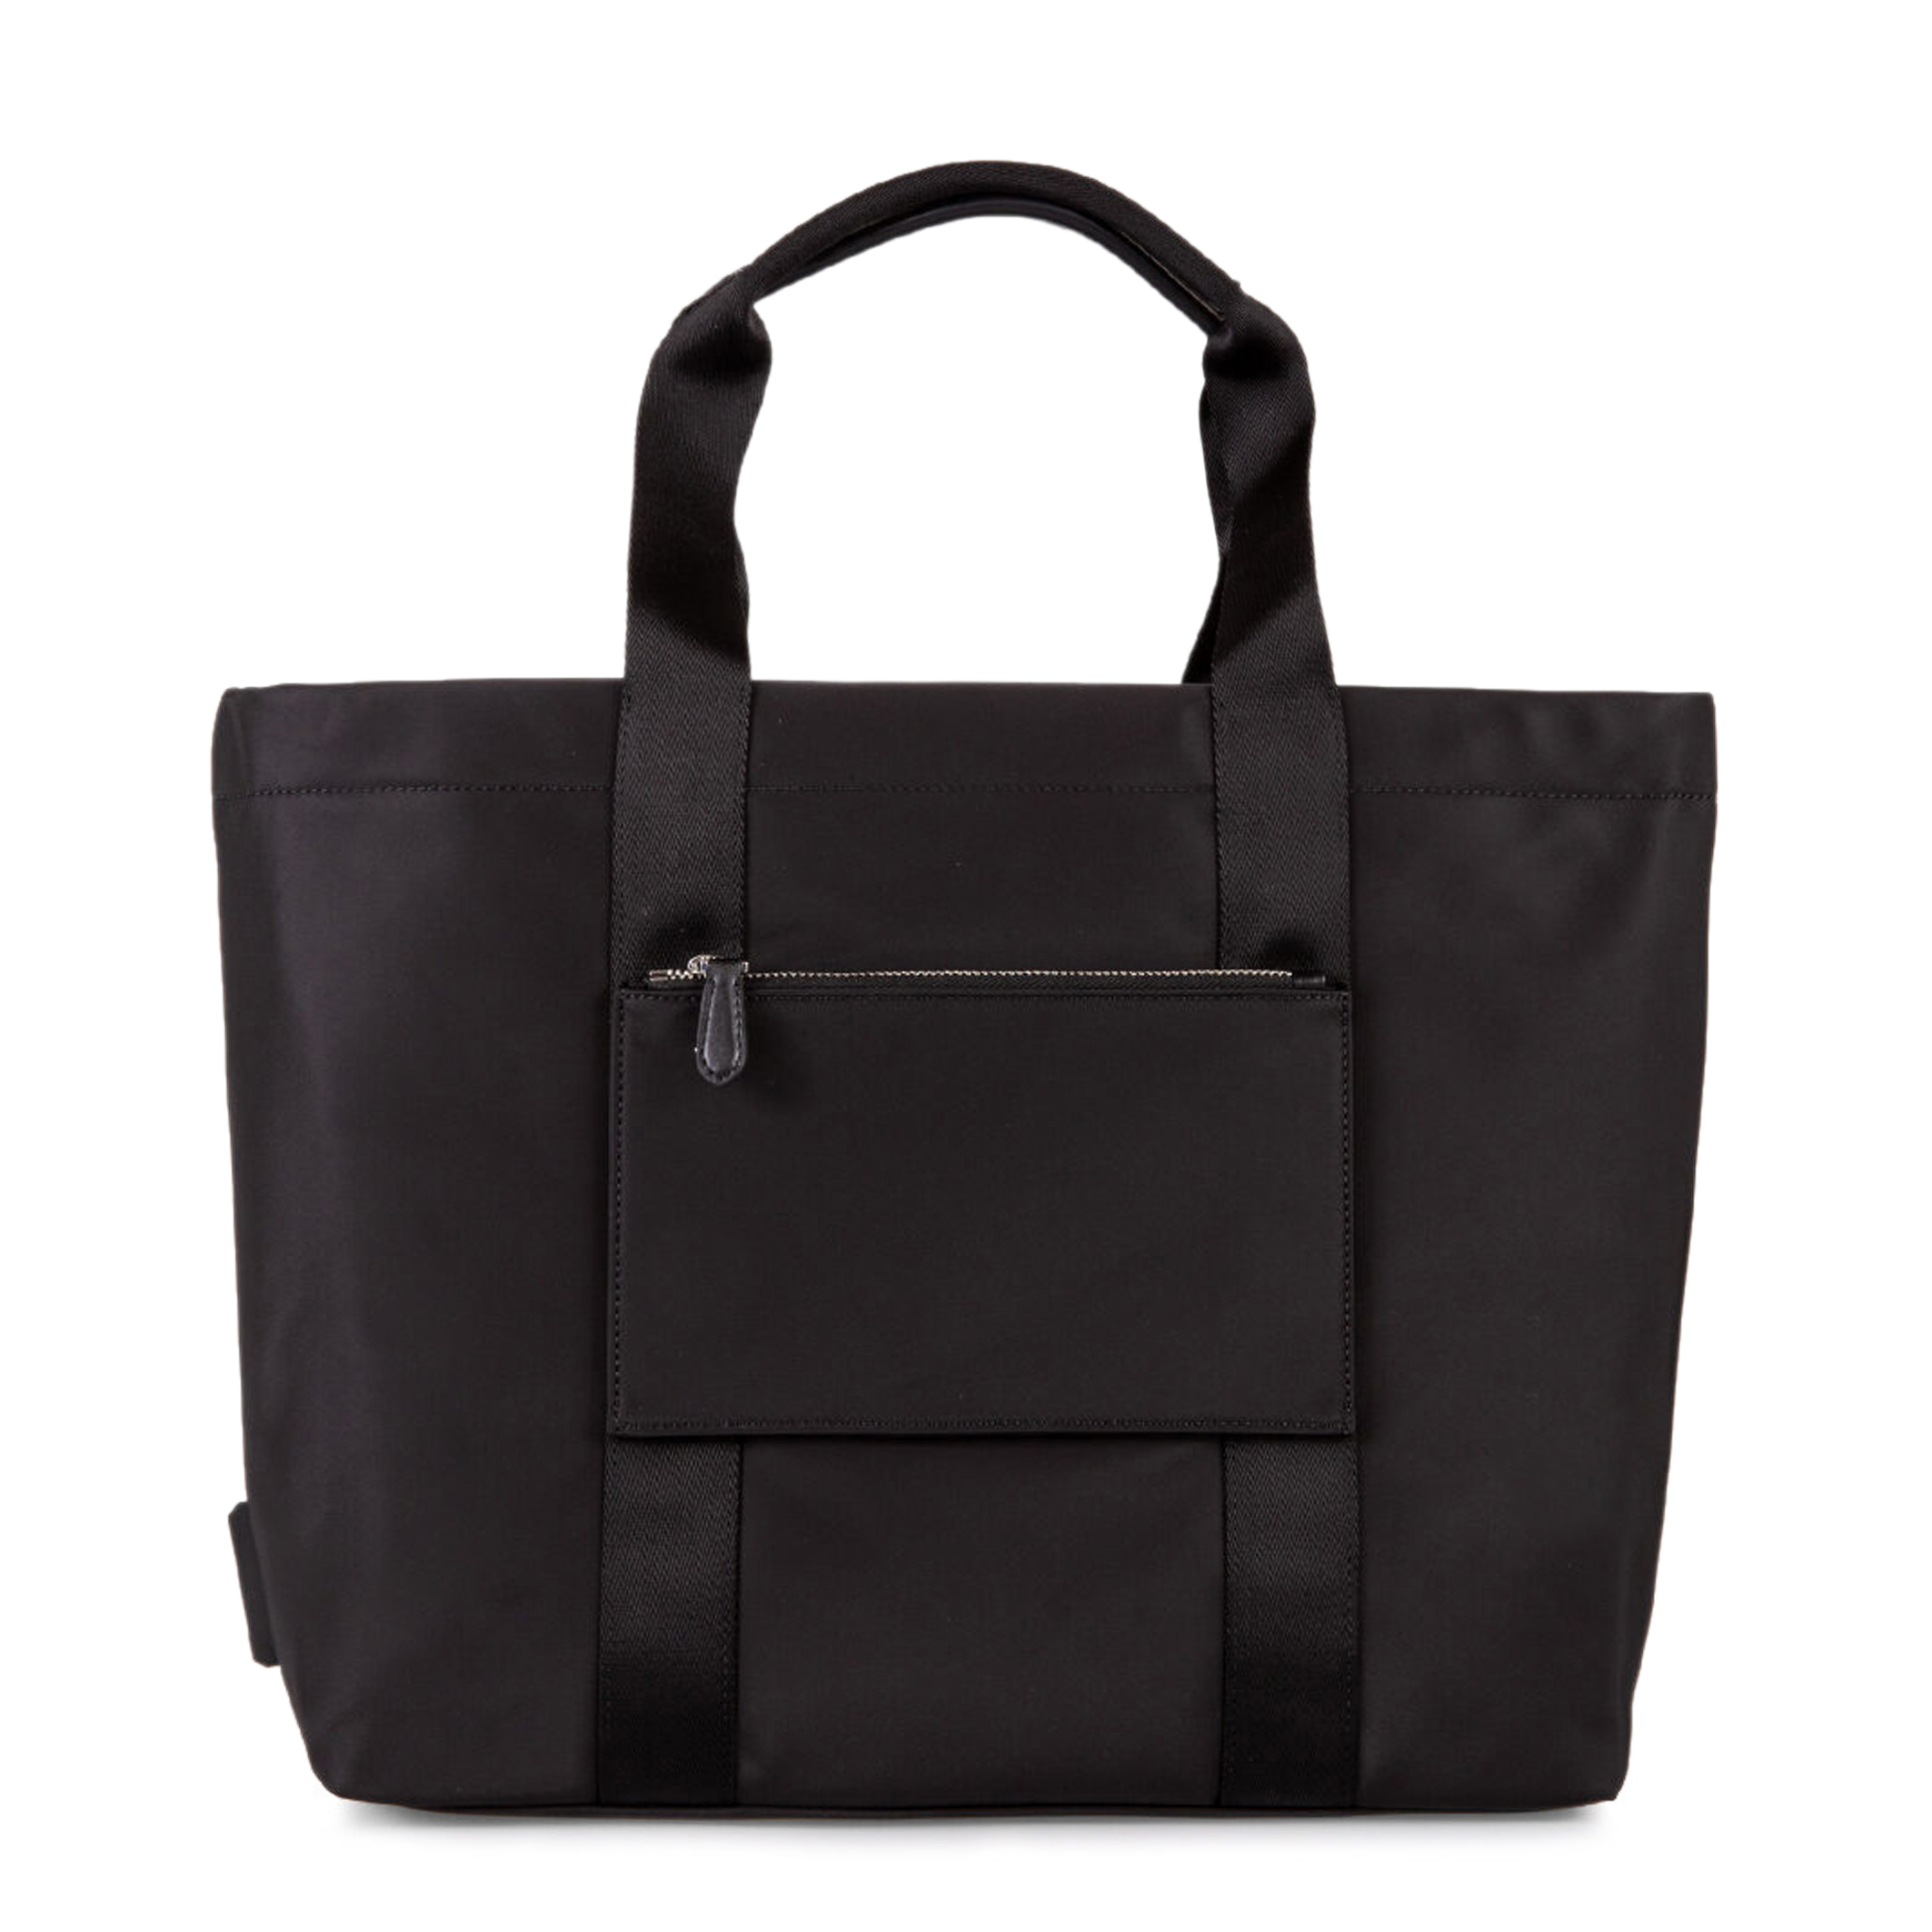 Karl Lagerfeld Black Shopping bags for Women - 215W3016